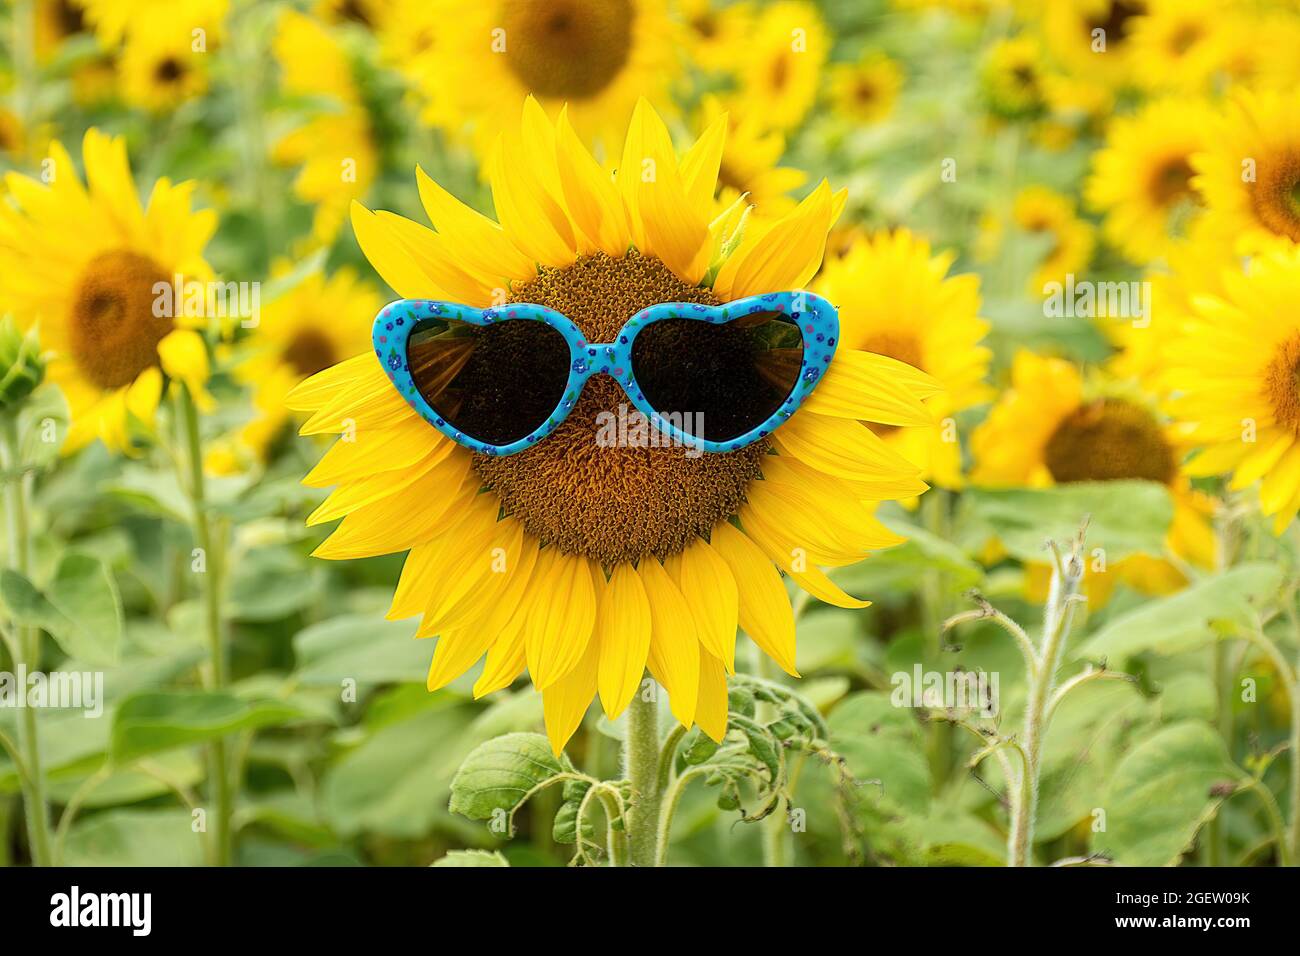 heart-shaped sunglasses on yellow sunflower head in Michigan sunflower field Stock Photo